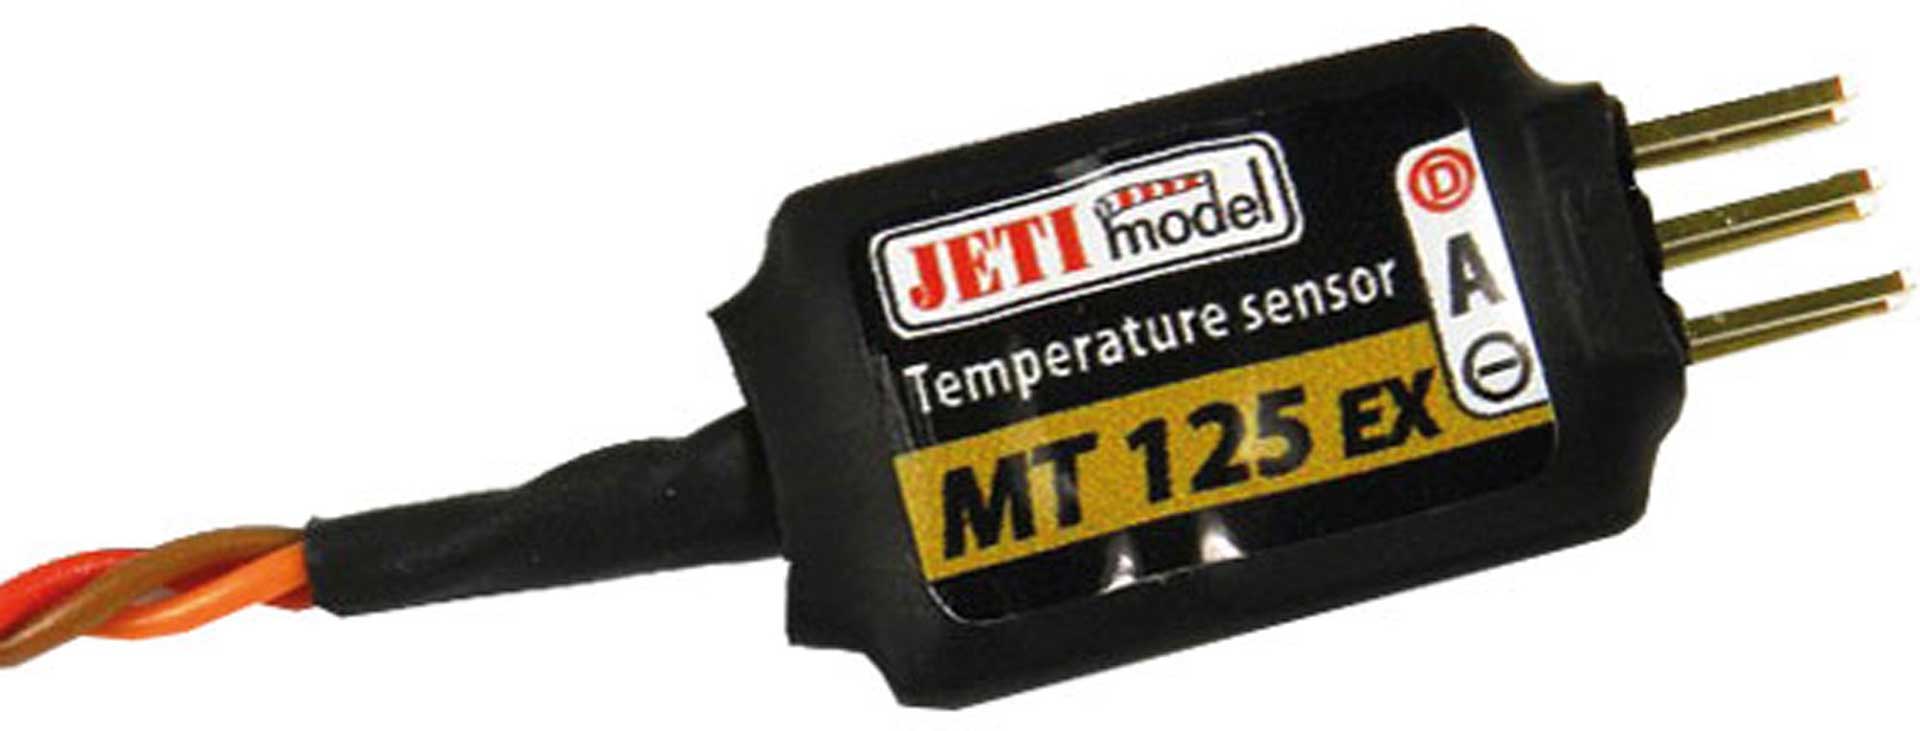 JETI DUPLEX EX TELEMETRIE SENSOR MT 125 Temperatursensor